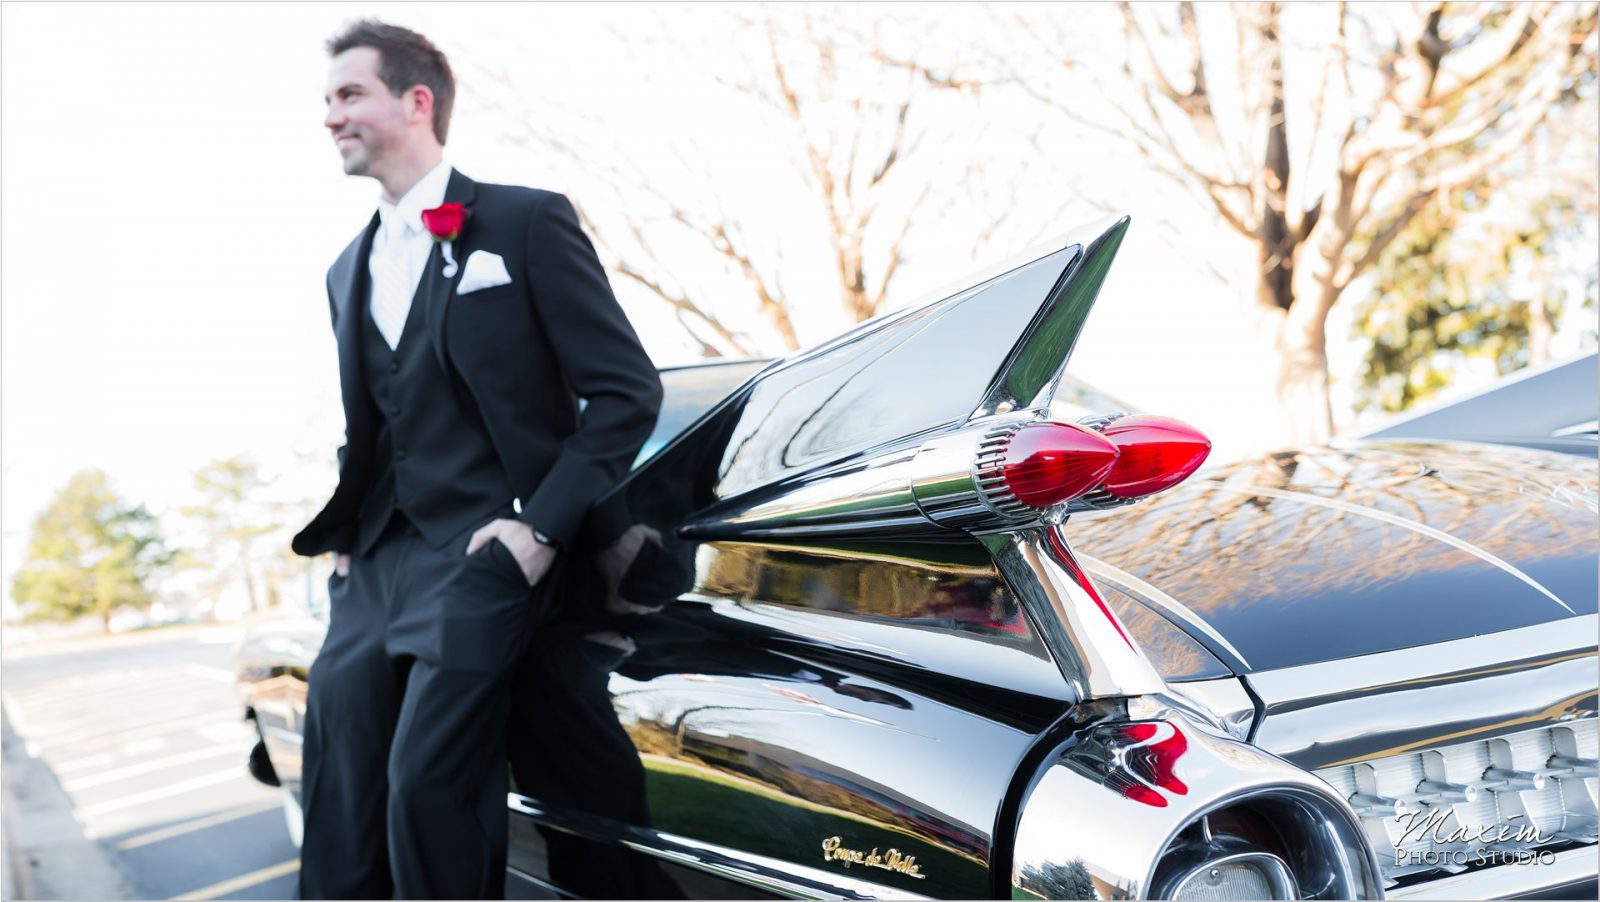 Dayton Marriott Wedding antique Car groom